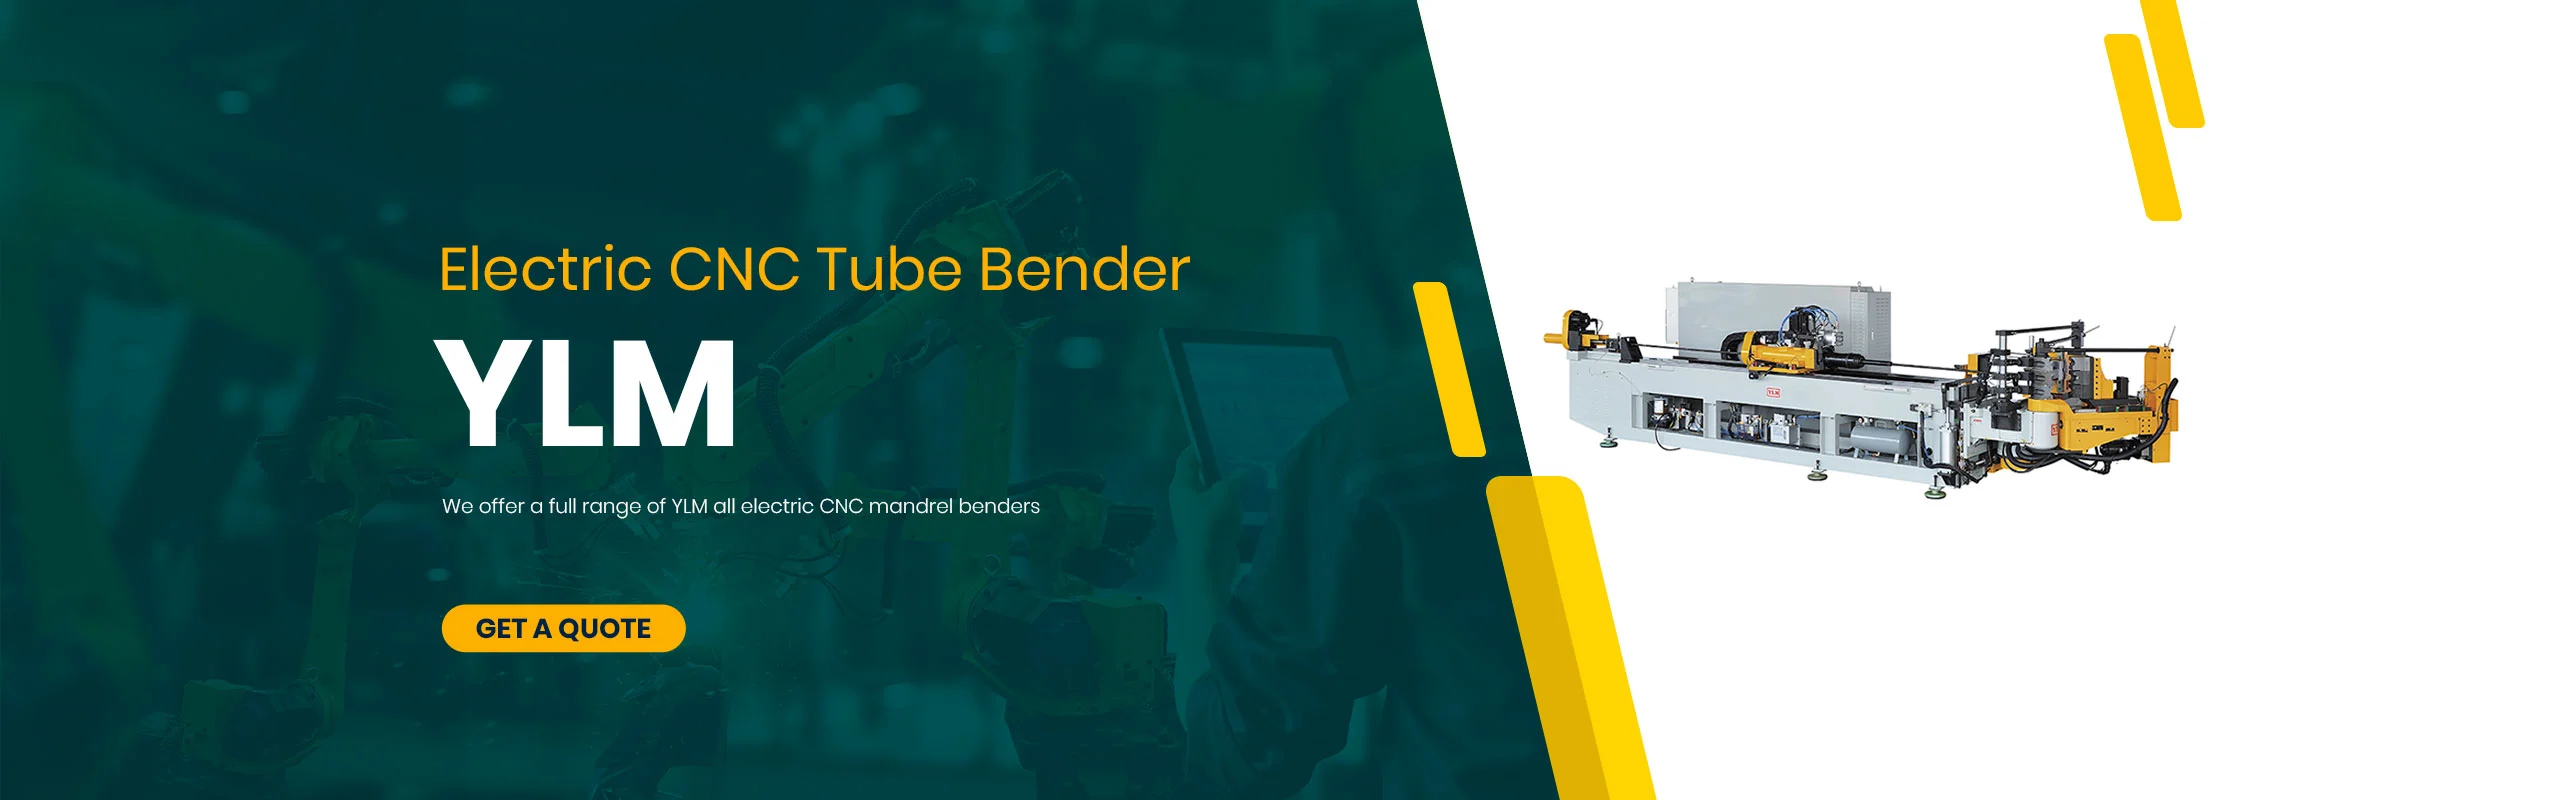 Electric CNC Tube Bender - YLM